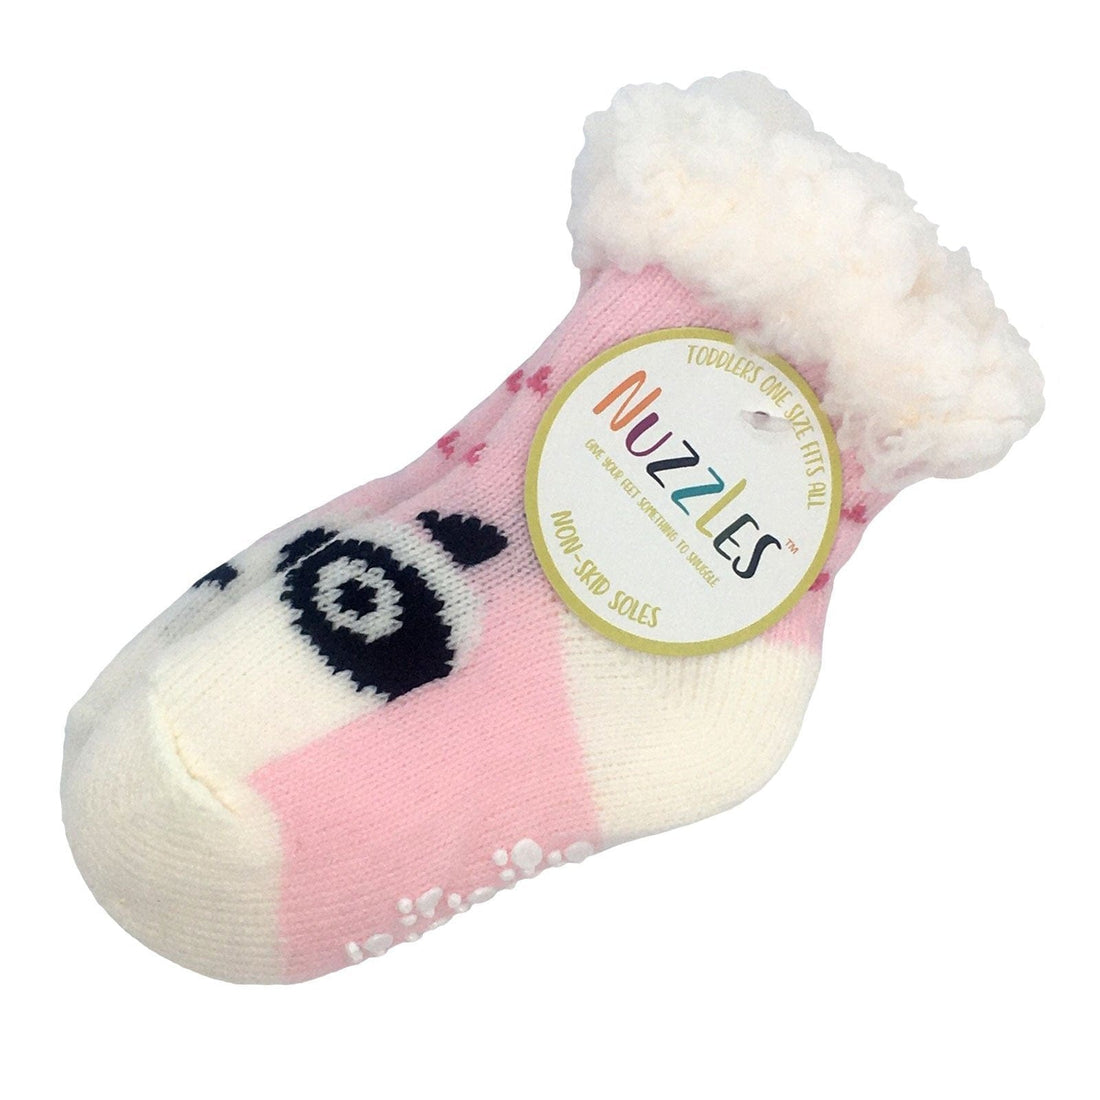 Racoon - Toddler (6-24mths) Nuzzles Slipper Socks.